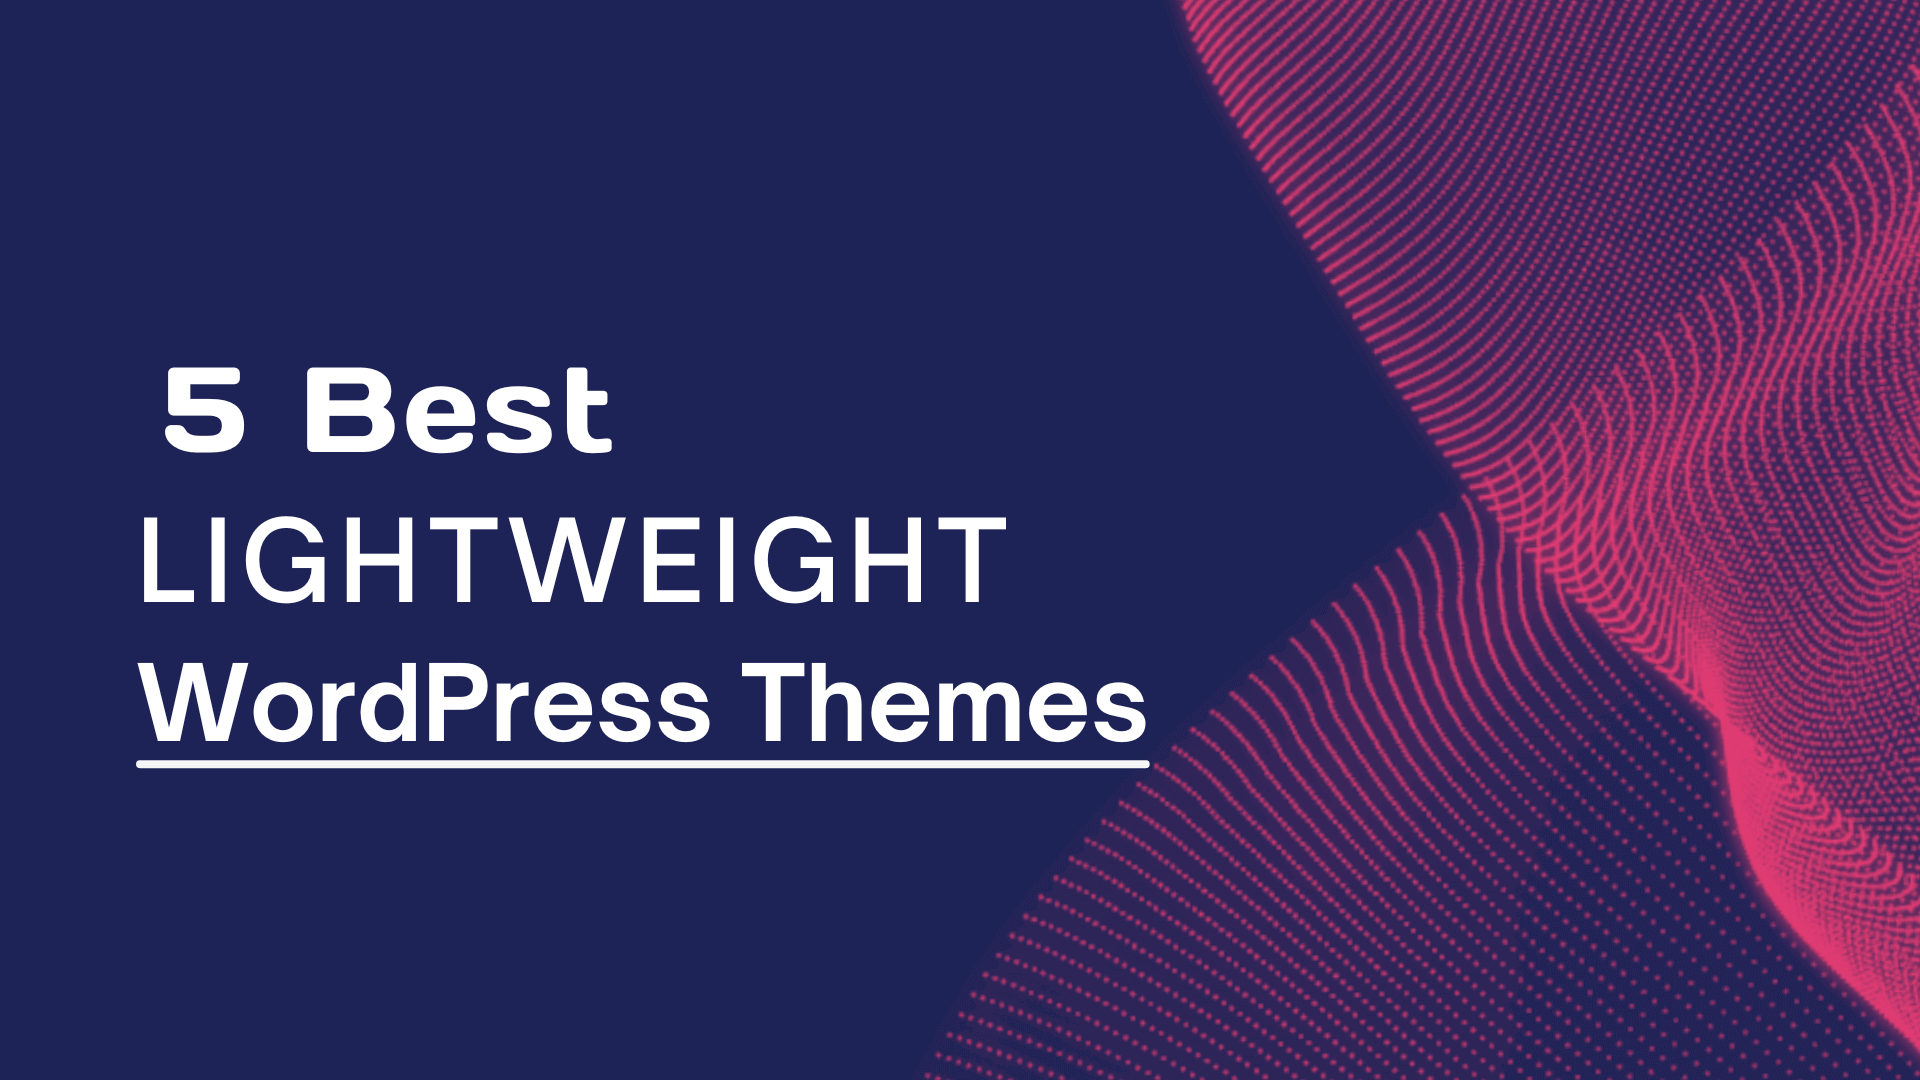 Lightweight WordPress Themes Banner